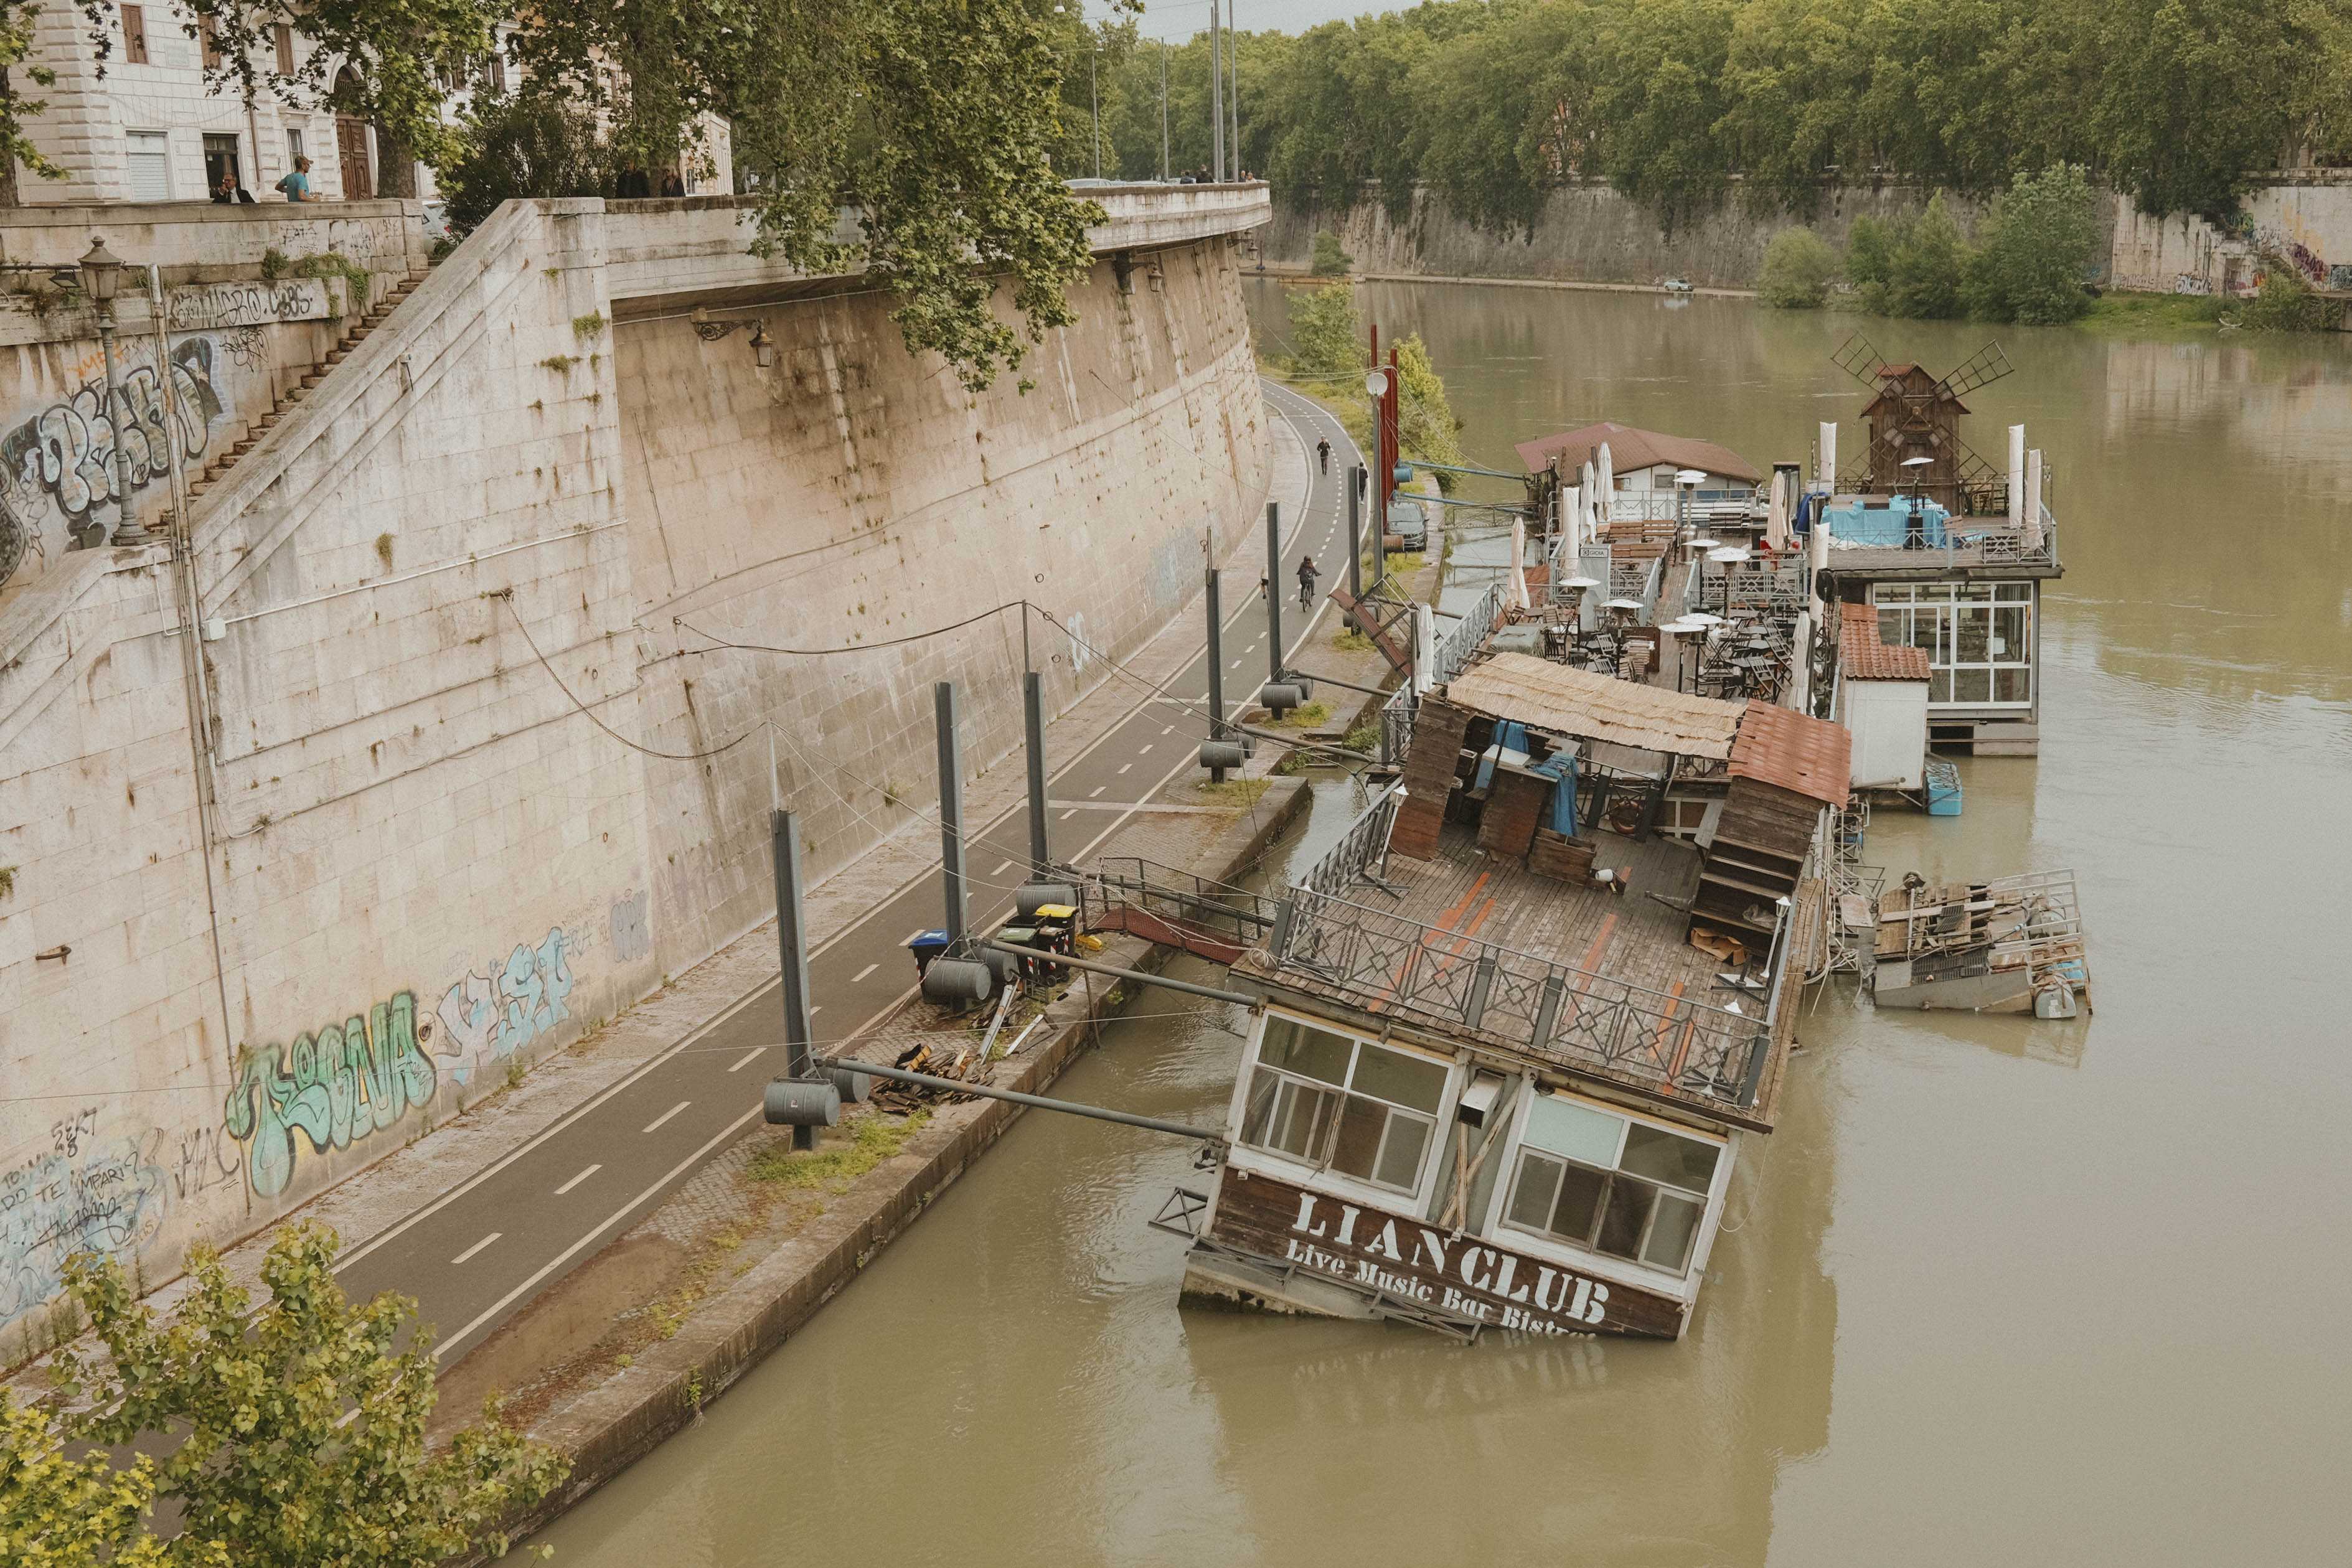 A half-sunken houseboat or floating night club